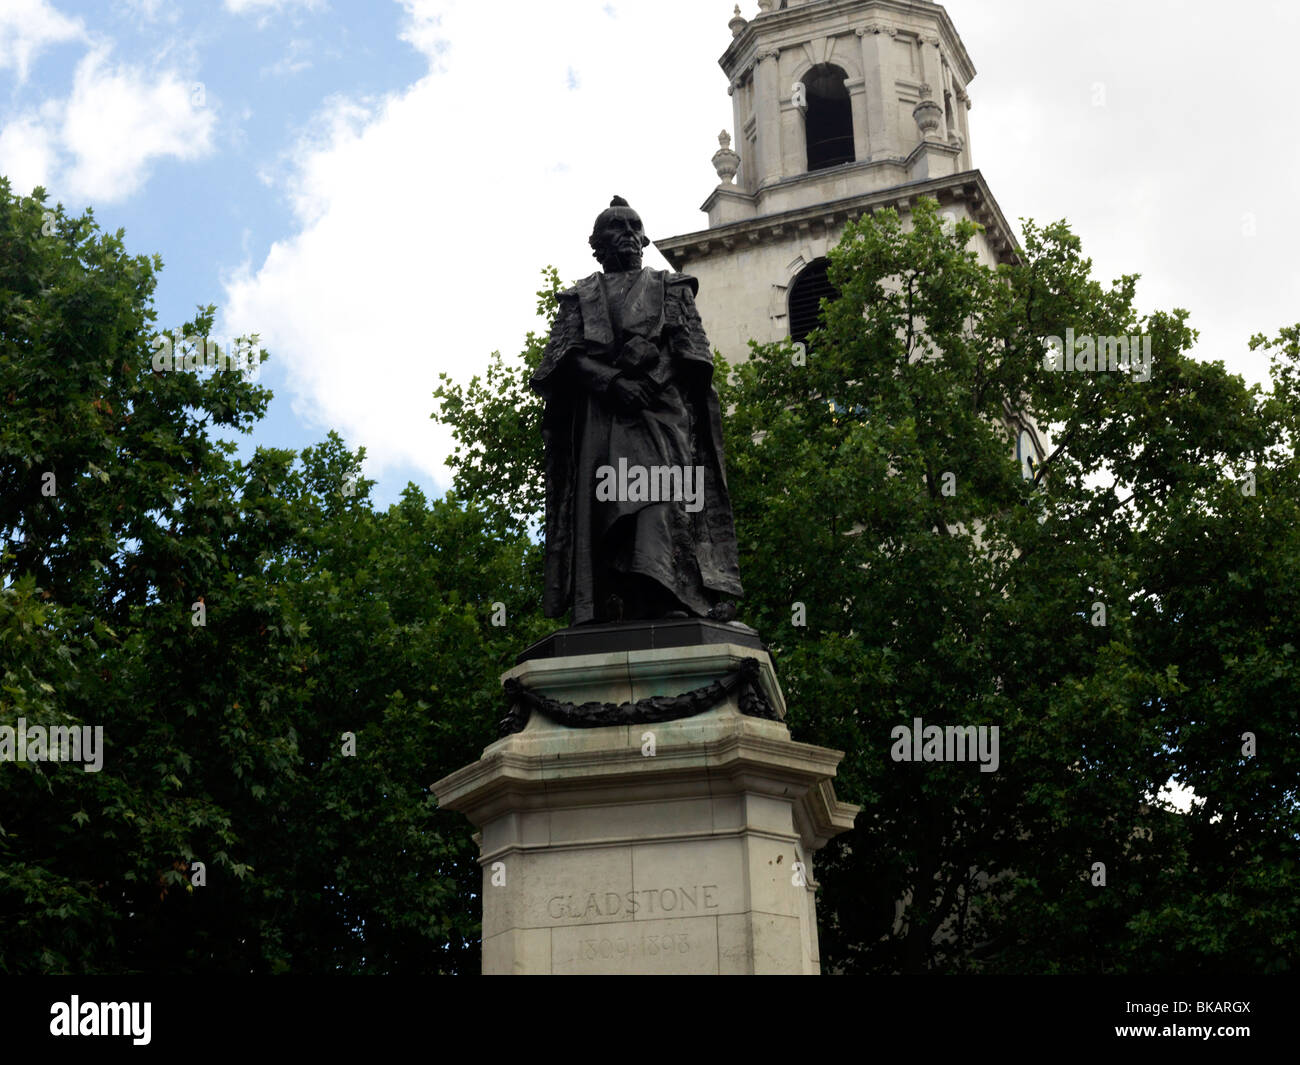 Aldwych London England Statue Of William Gladstone 1809 - 1898 Stock Photo